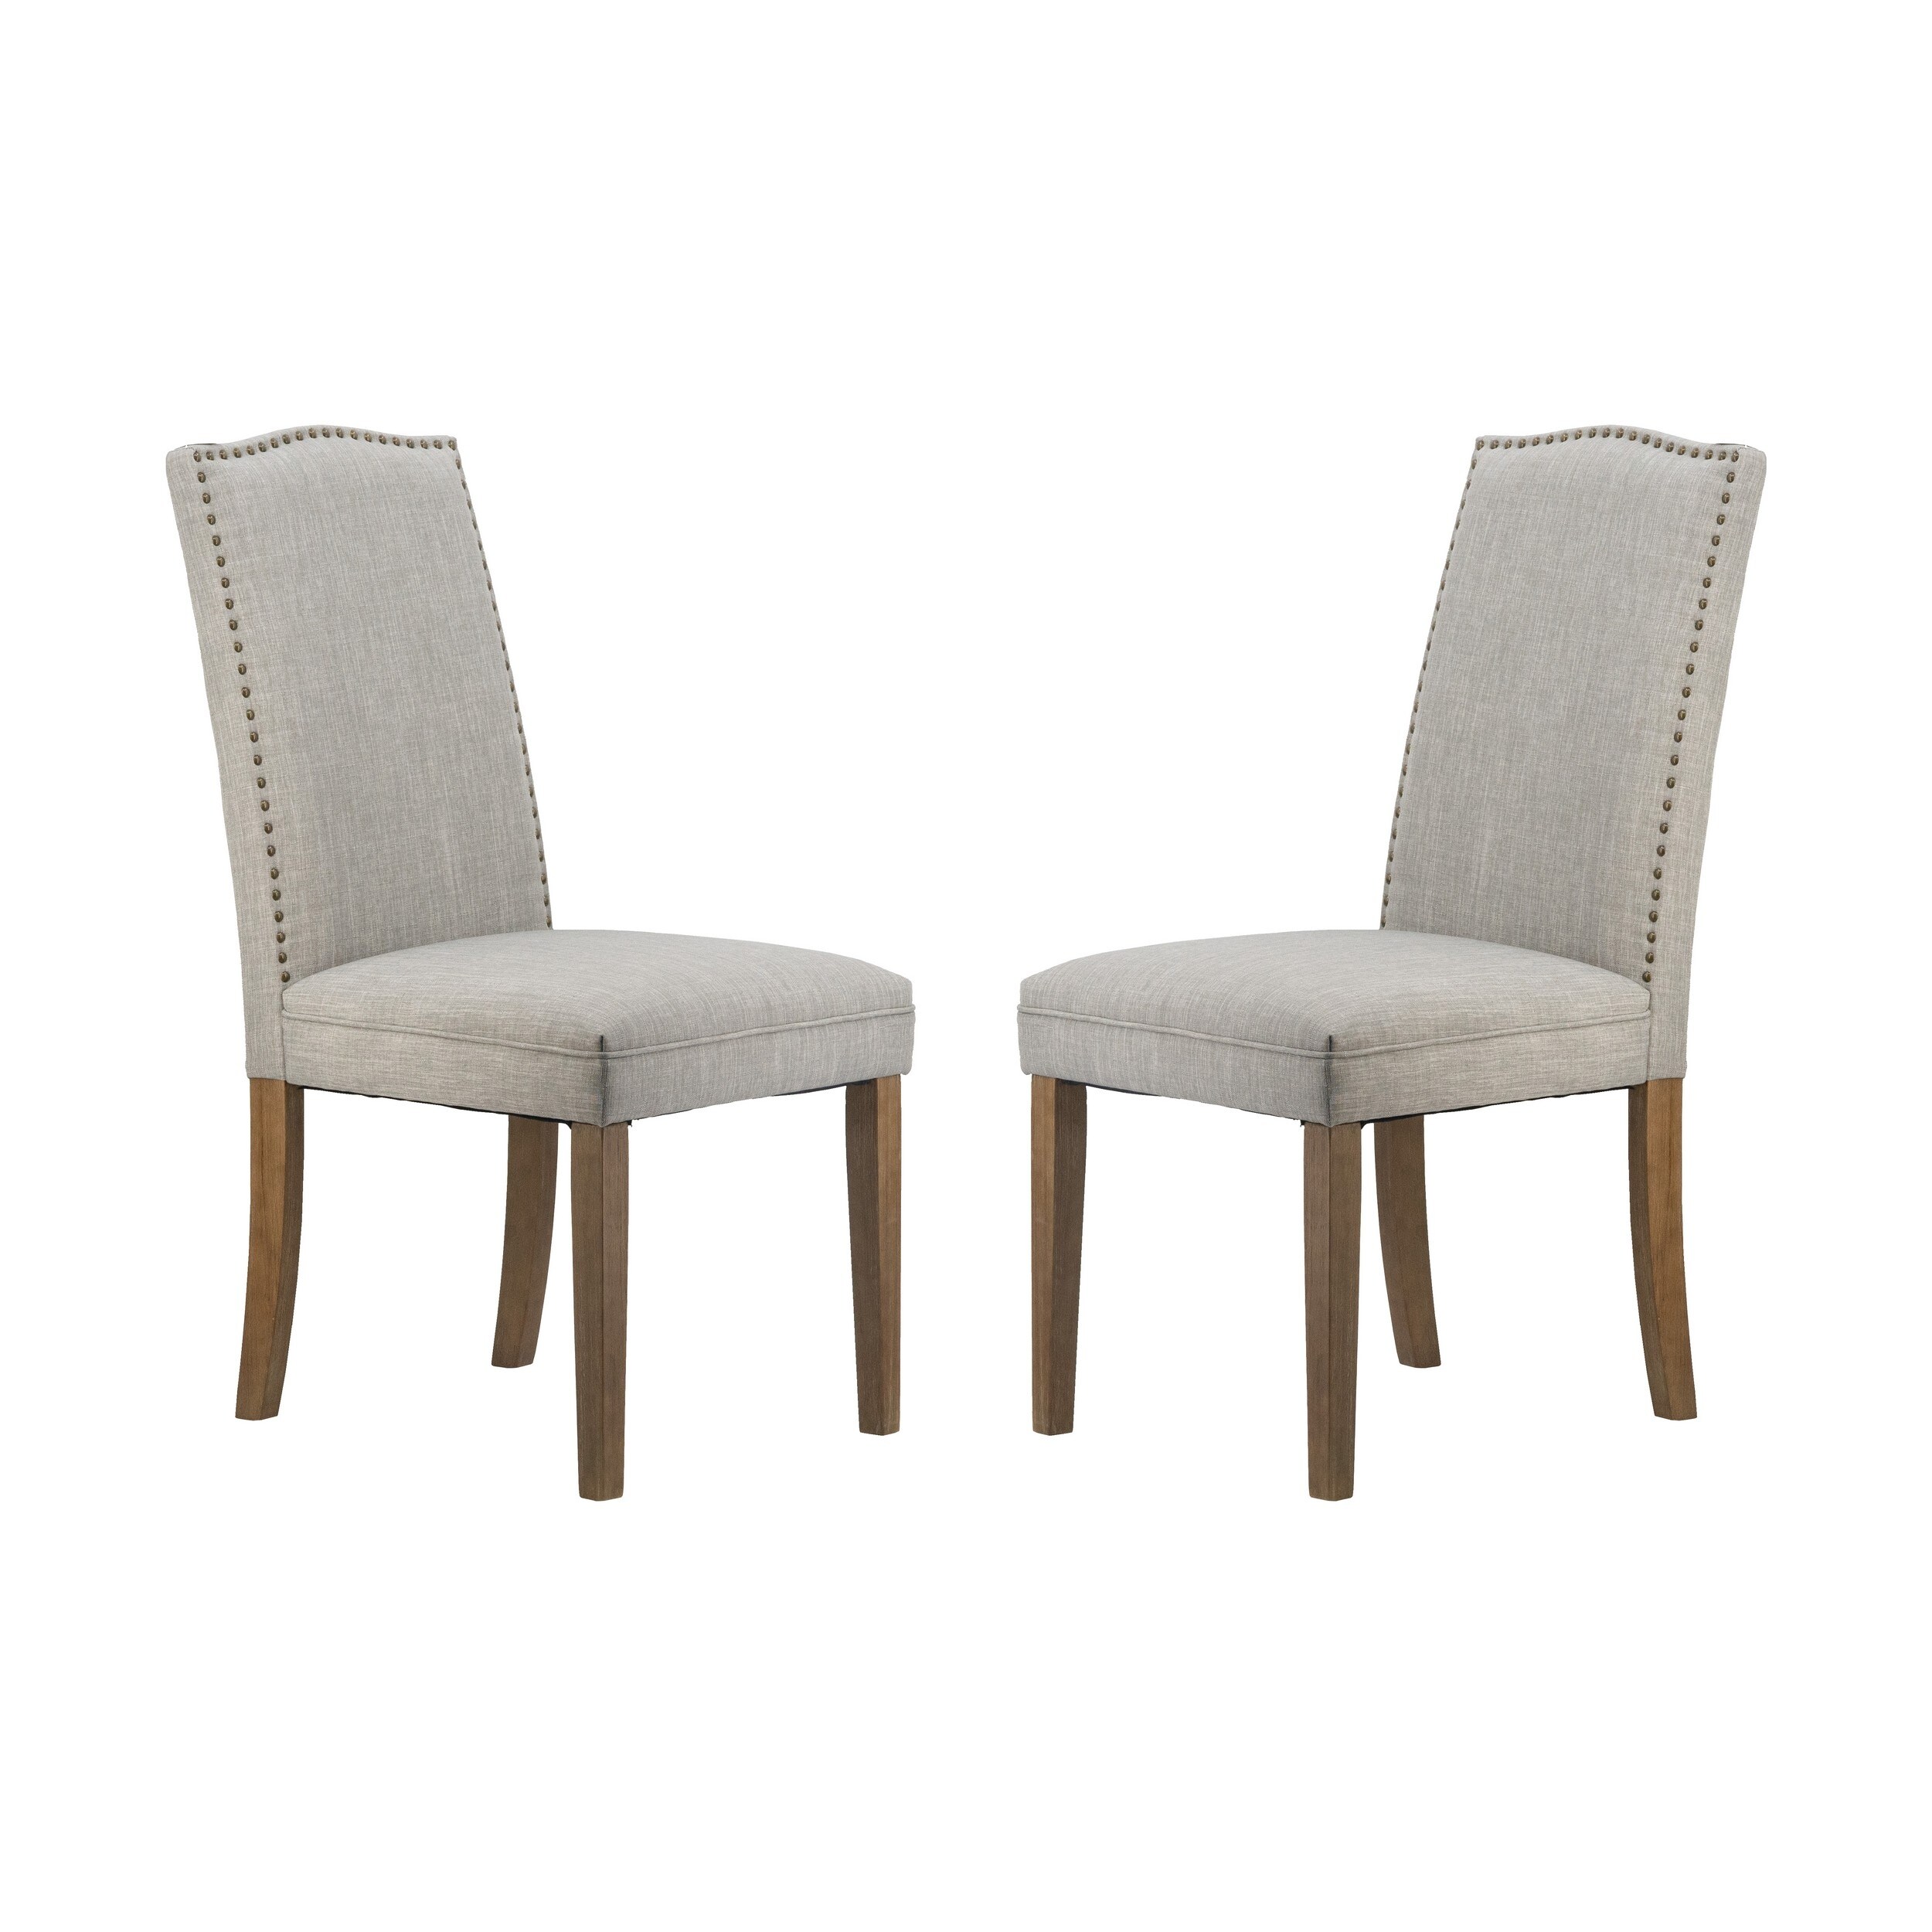 Elva 24 Inch Dining Chair, Smooth Gray Fabric, Nailhead Trim, Wood Legs